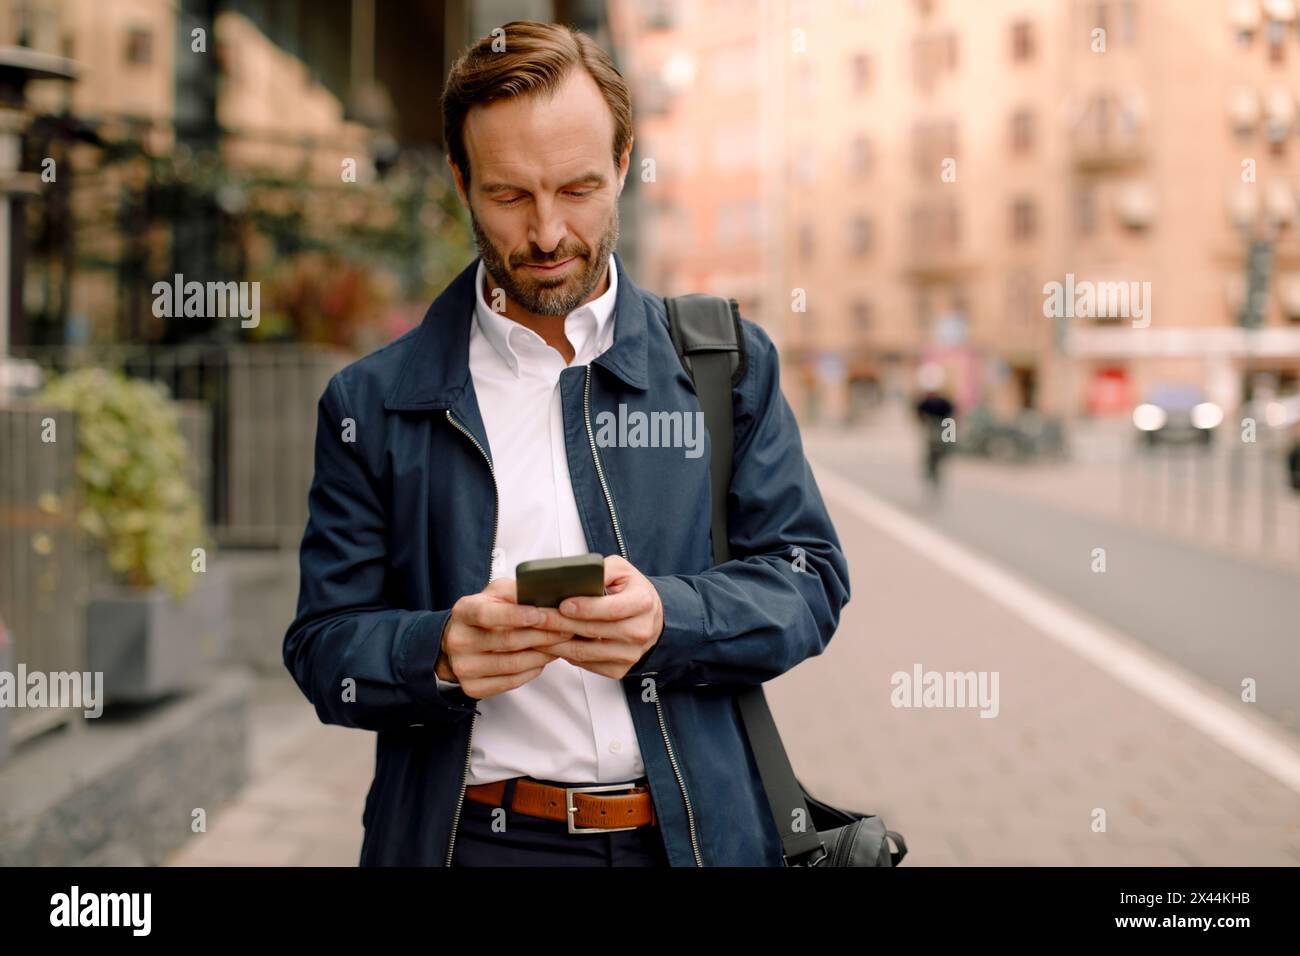 Businessman using smart phone while walking on sidewalk in city Stock Photo